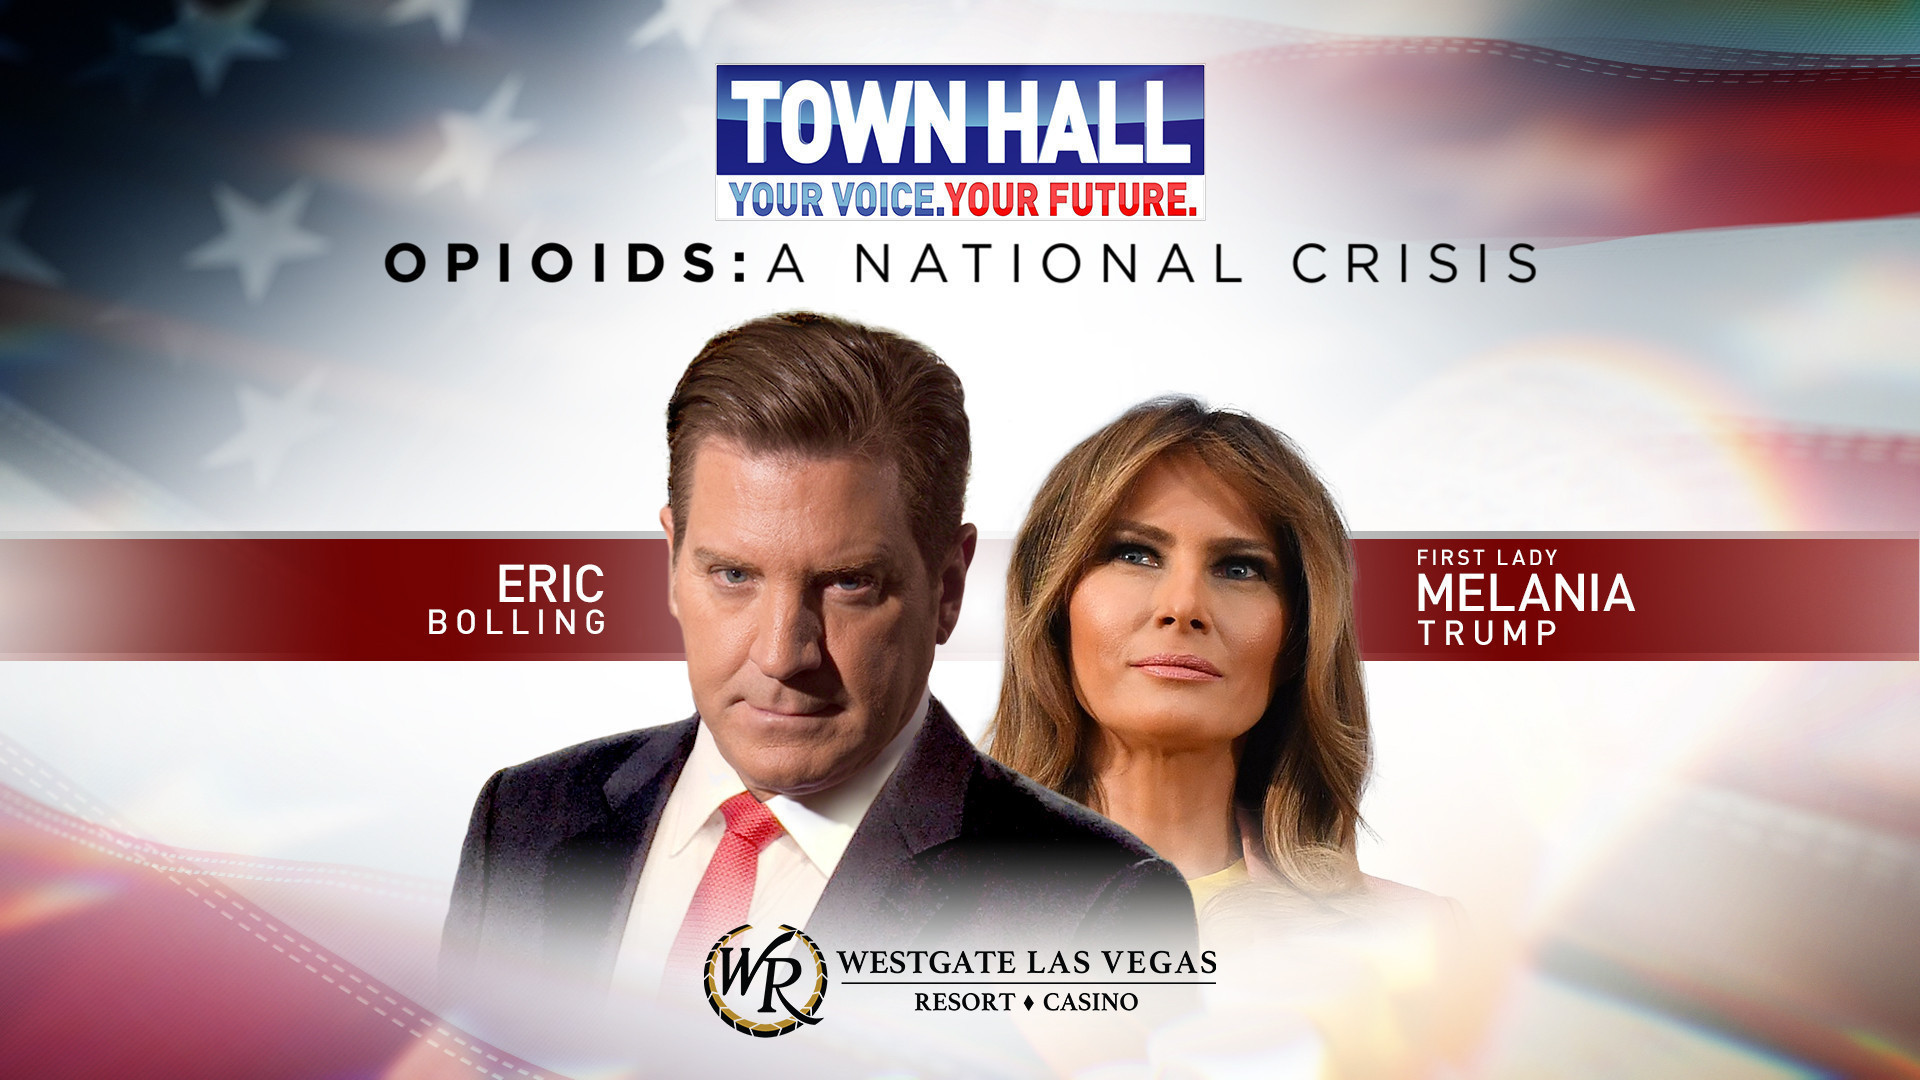 Melania Trump’s town hall set for the International Theater at Westgate Las Vegas Resort & Casino